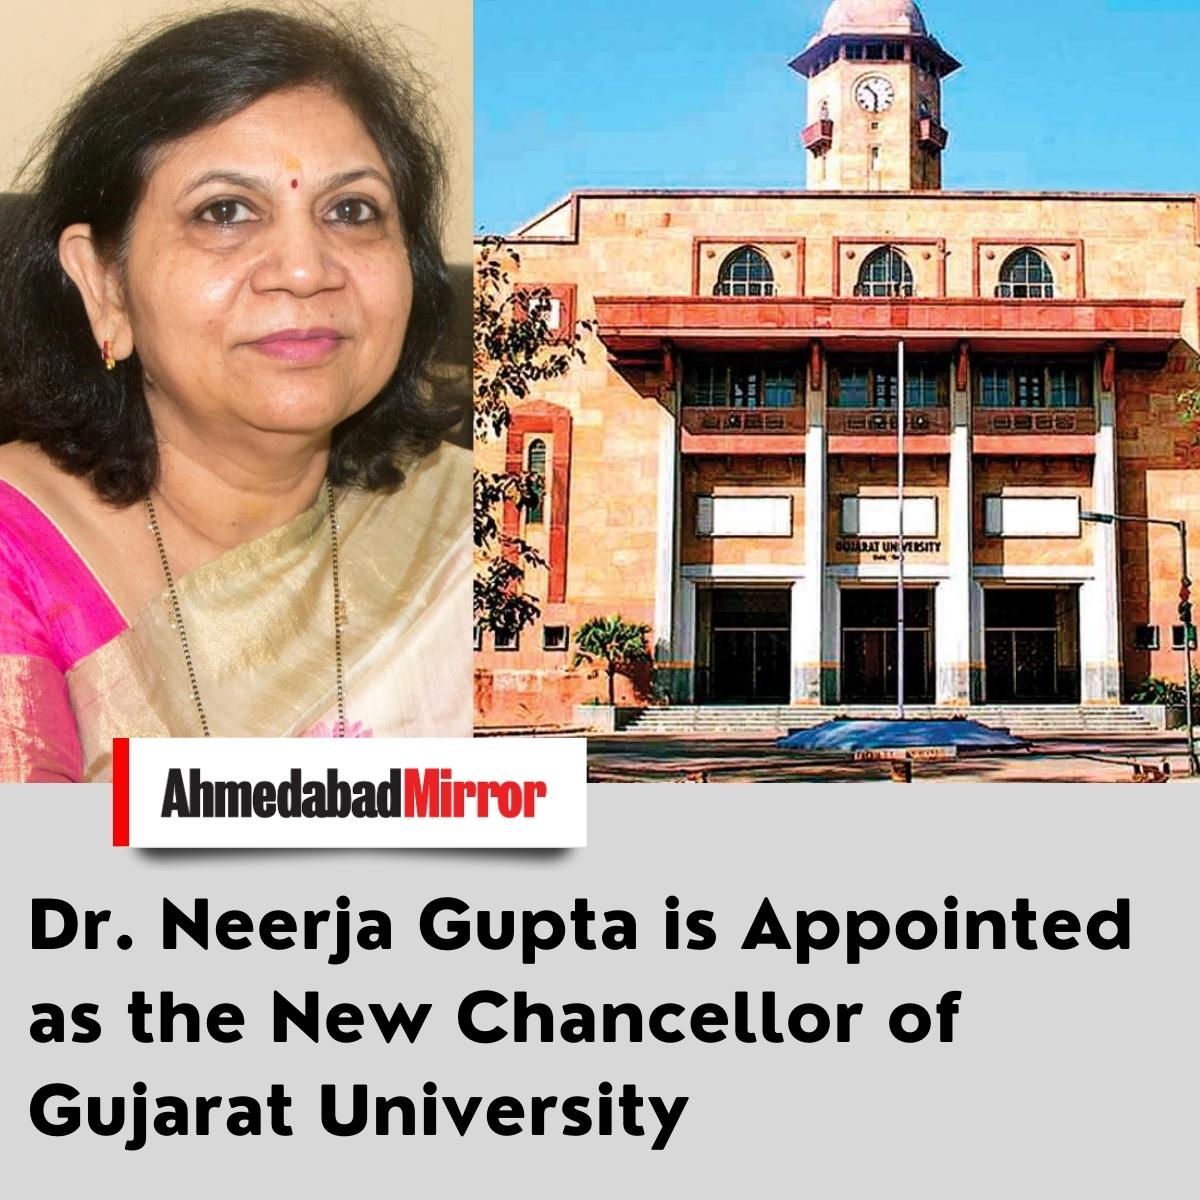 Dr. Neerja Gupta is appointed as the new Chancellor of Gujarat University #gujaratuniversity #amdavad #breakingnews #Ahmedabamirror #ahmedabadmirrorofficial #gujarat #ahmedabad